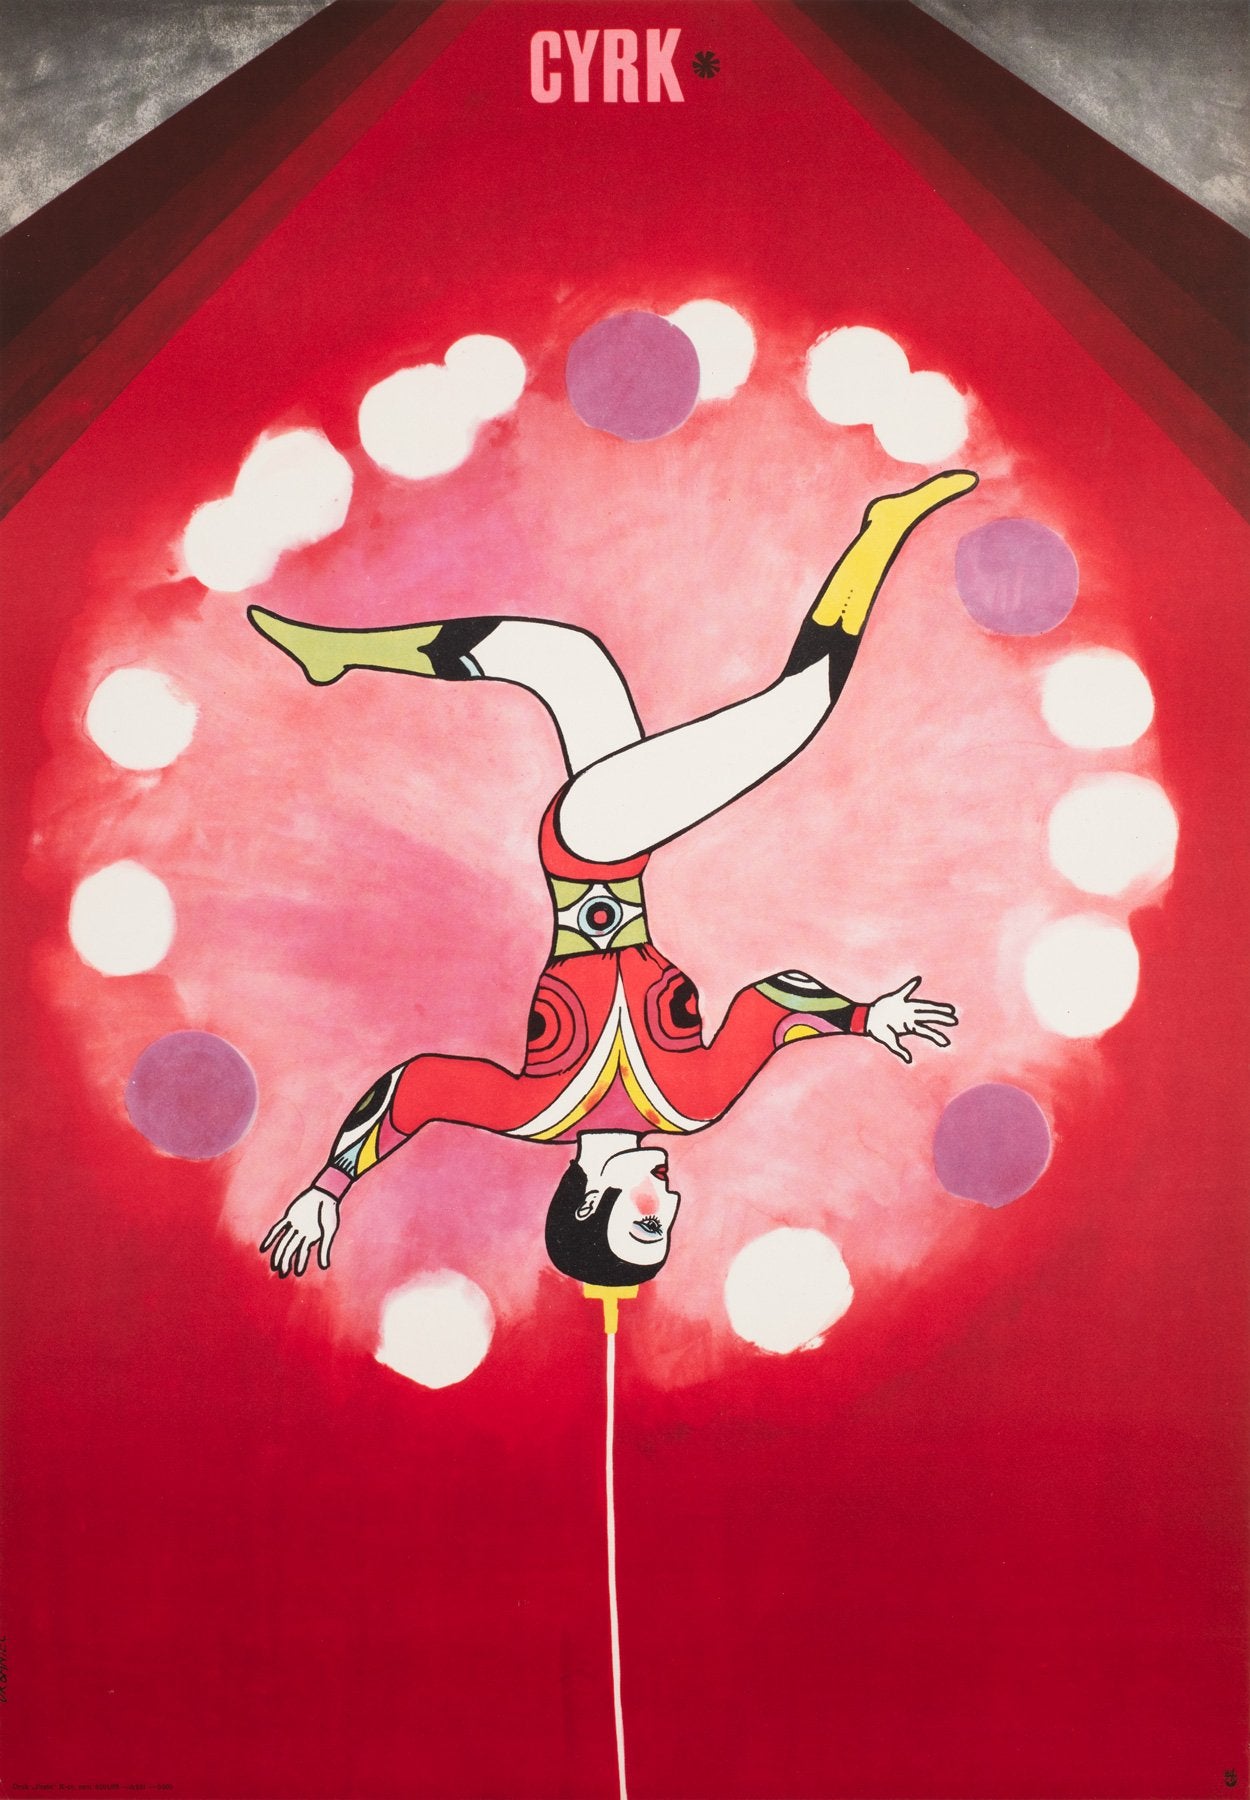 Cyrk Polish Circus Poster Balancing Juggling Acrobat 1968, Urbaniec